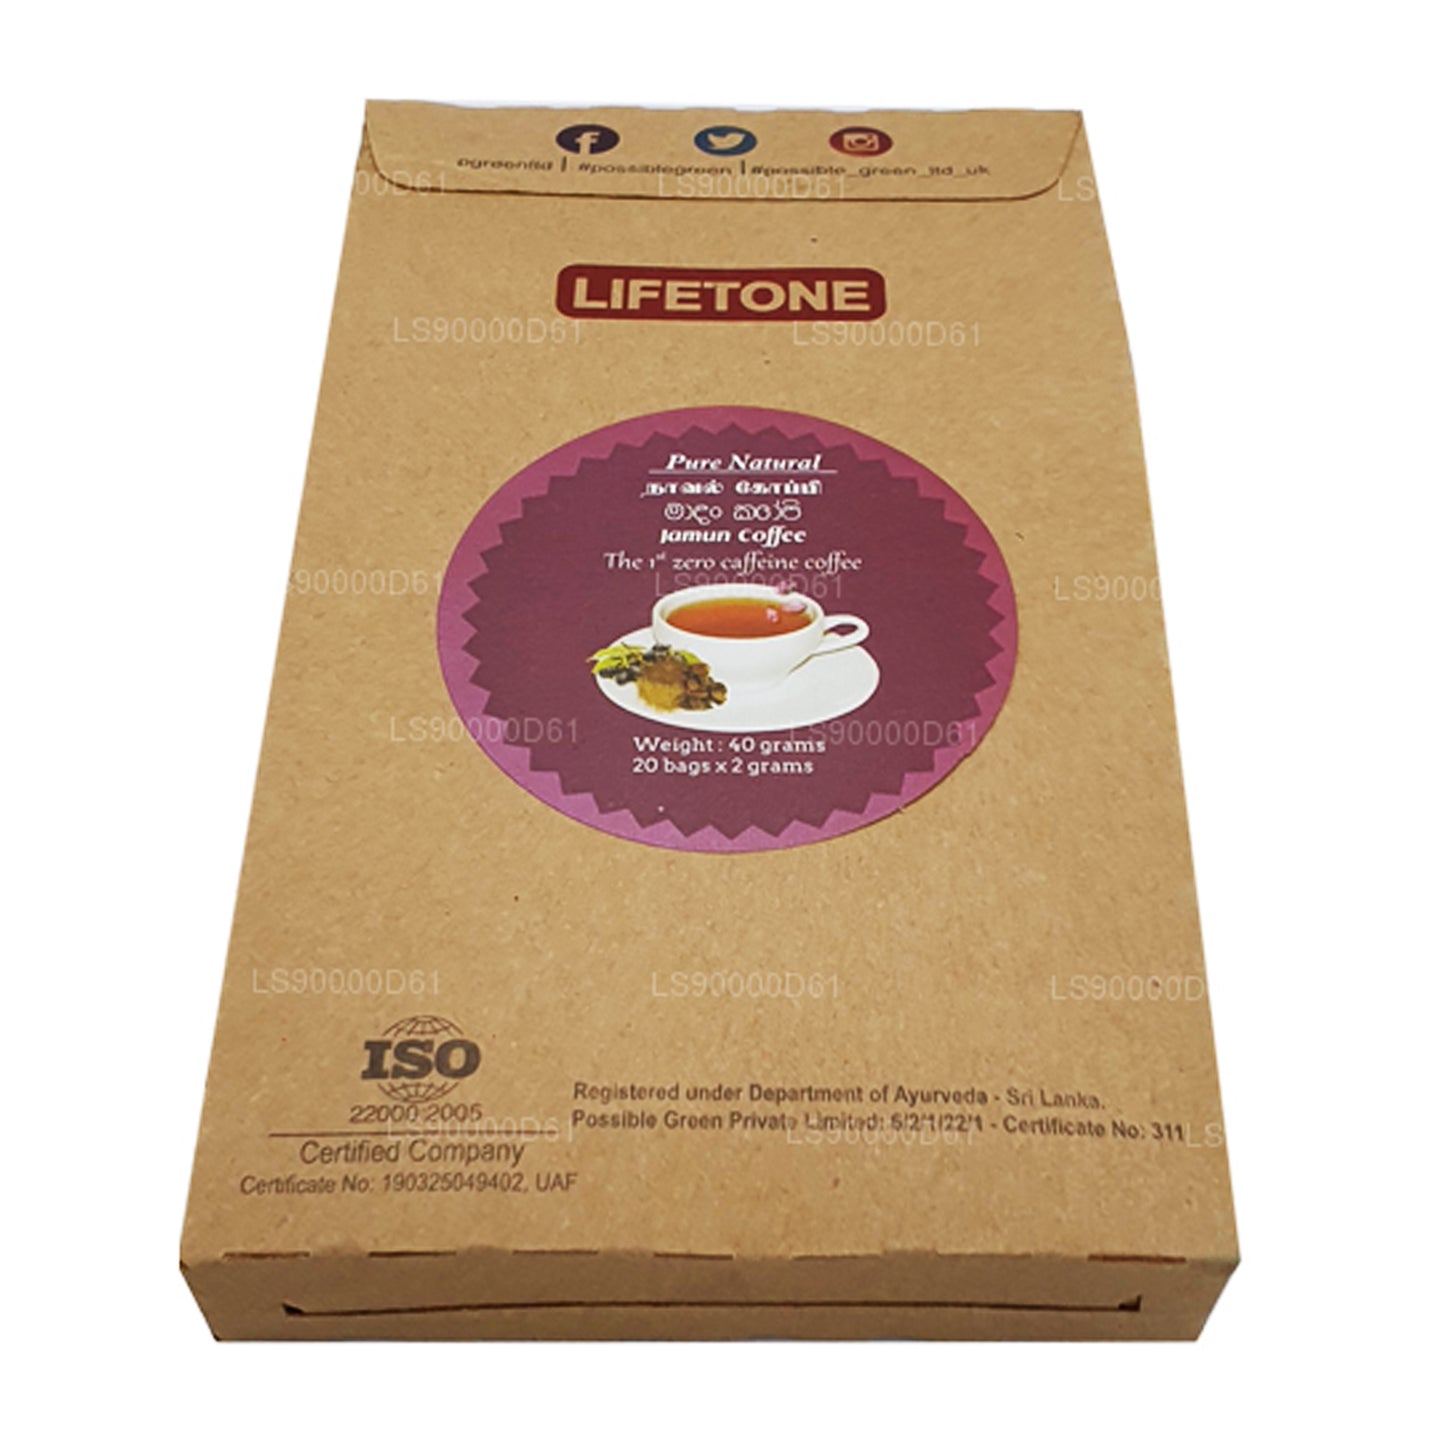 Lifetone Jamun Coffee (40g)